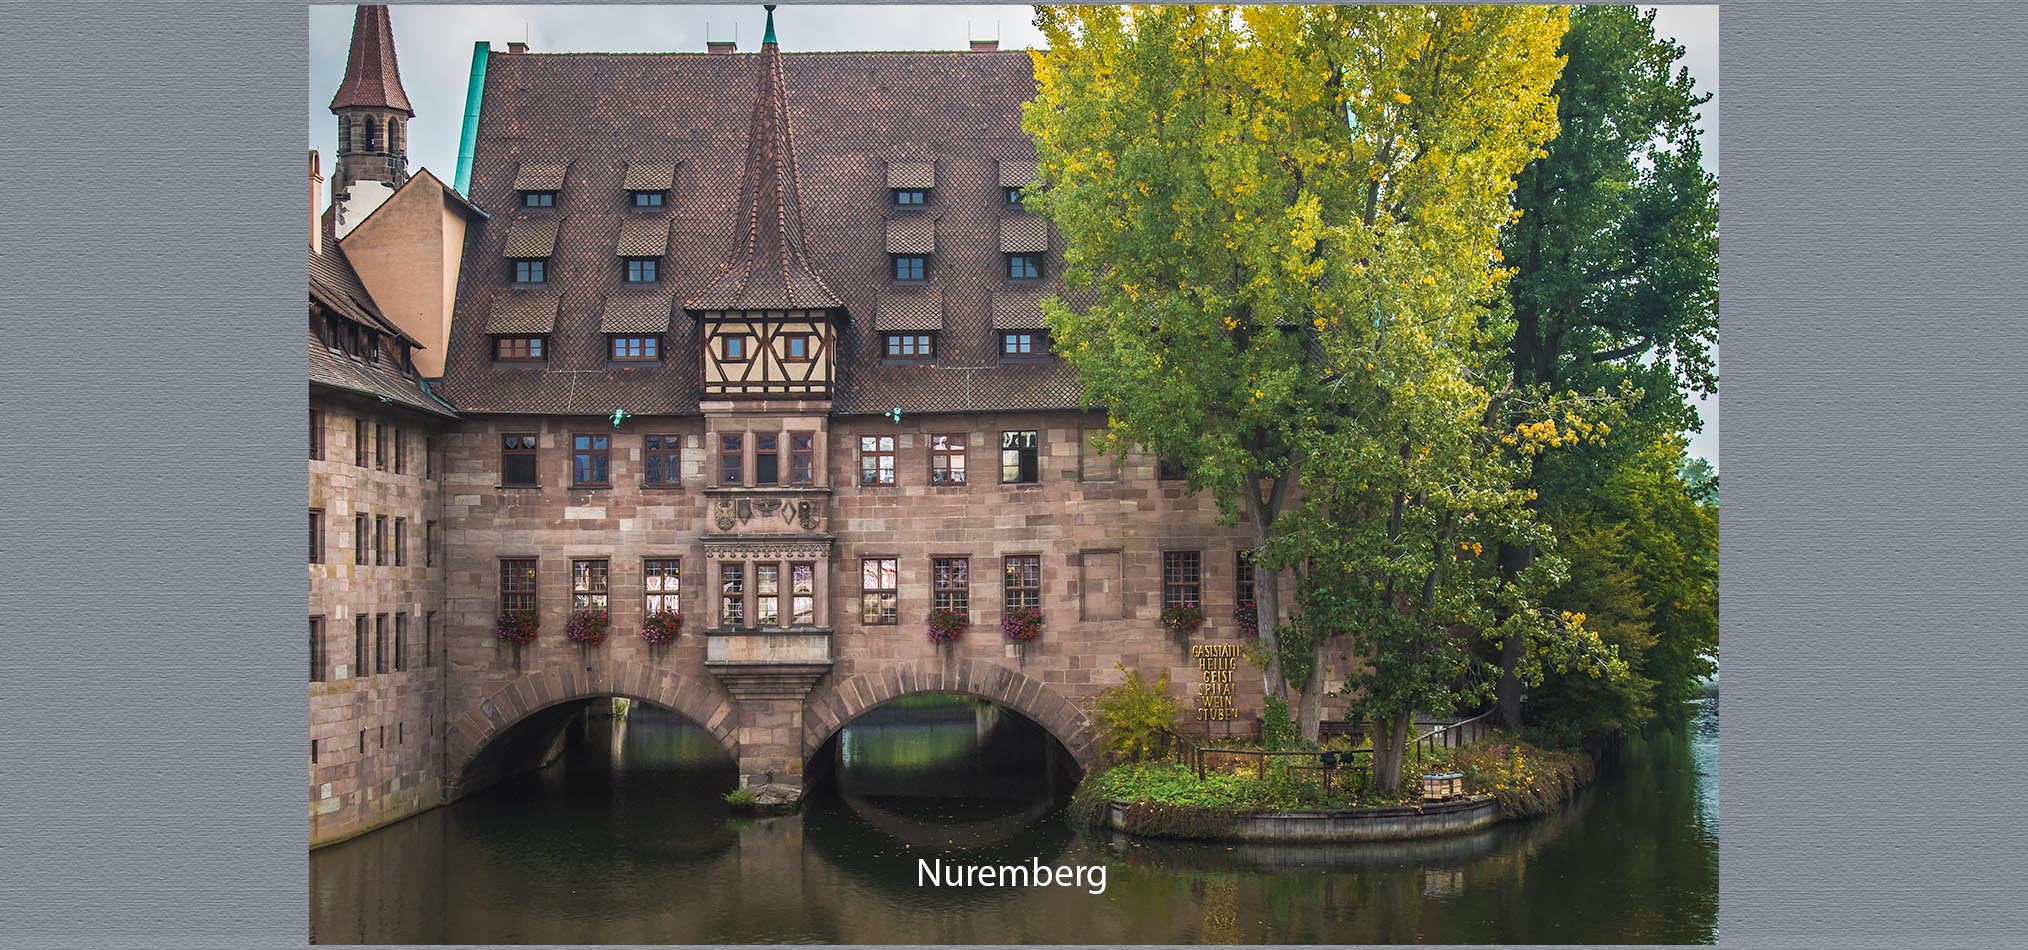 15-10 Nuremberg-14.jpg